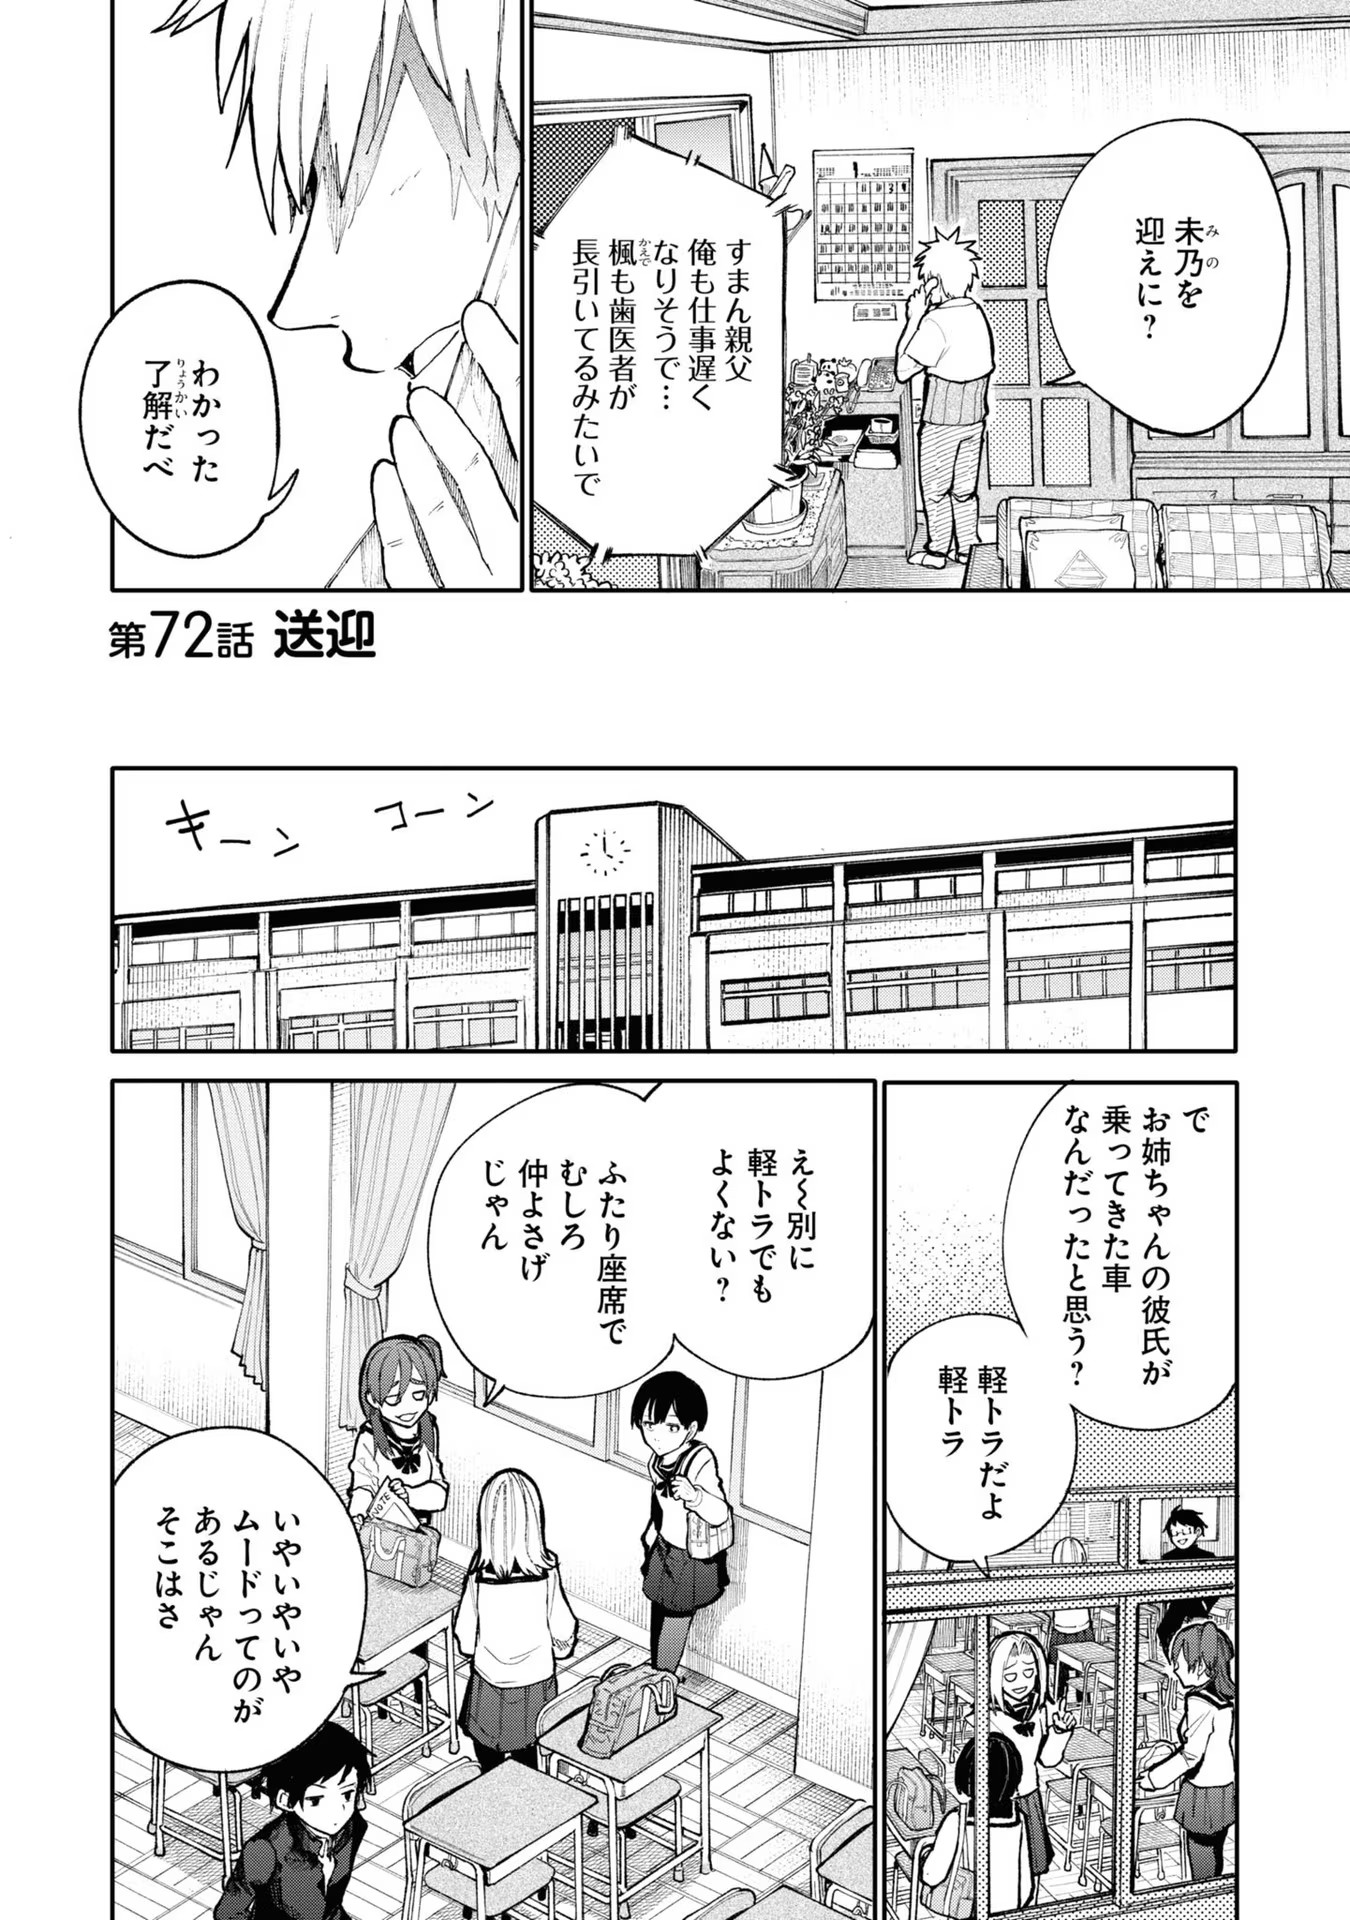 Ojii-san to Obaa-san ga Wakigaetta Hanashi - Chapter 72 - Page 1